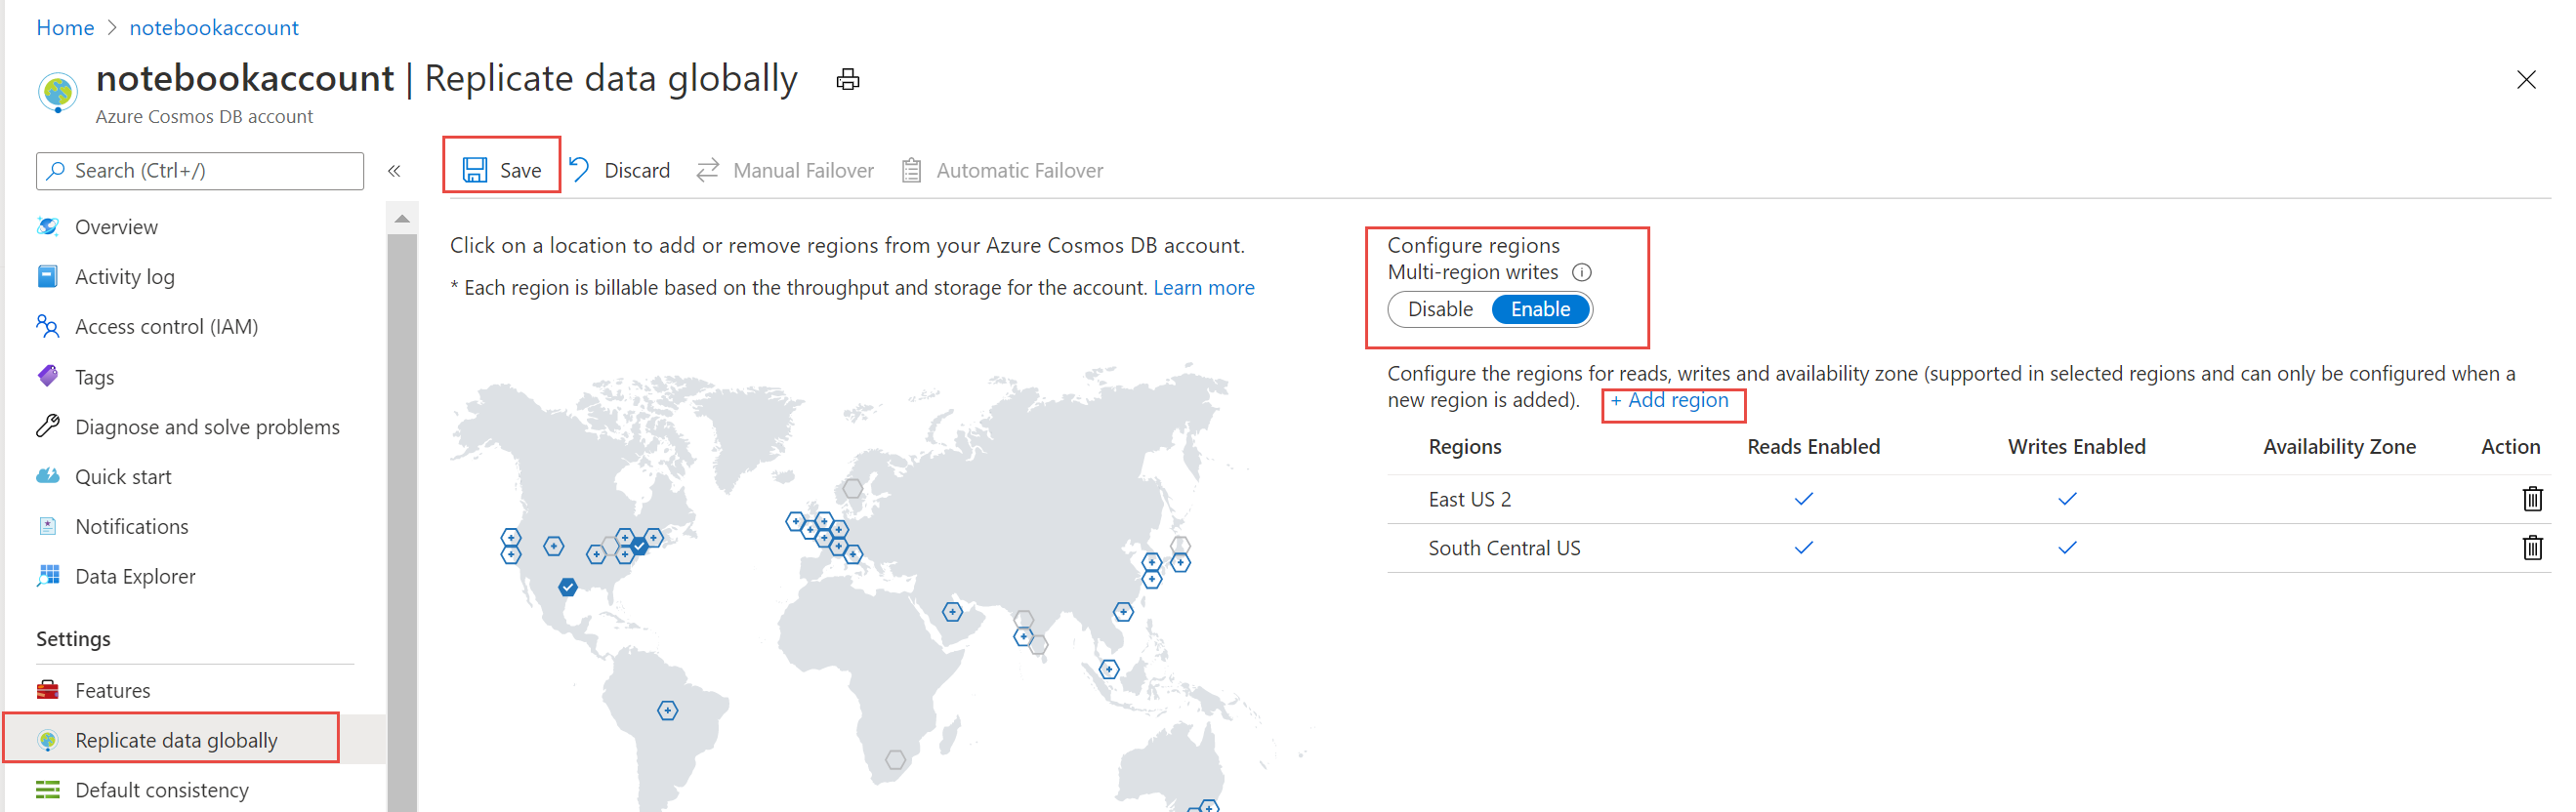 Screenshot to enable multi-region writes using Azure portal